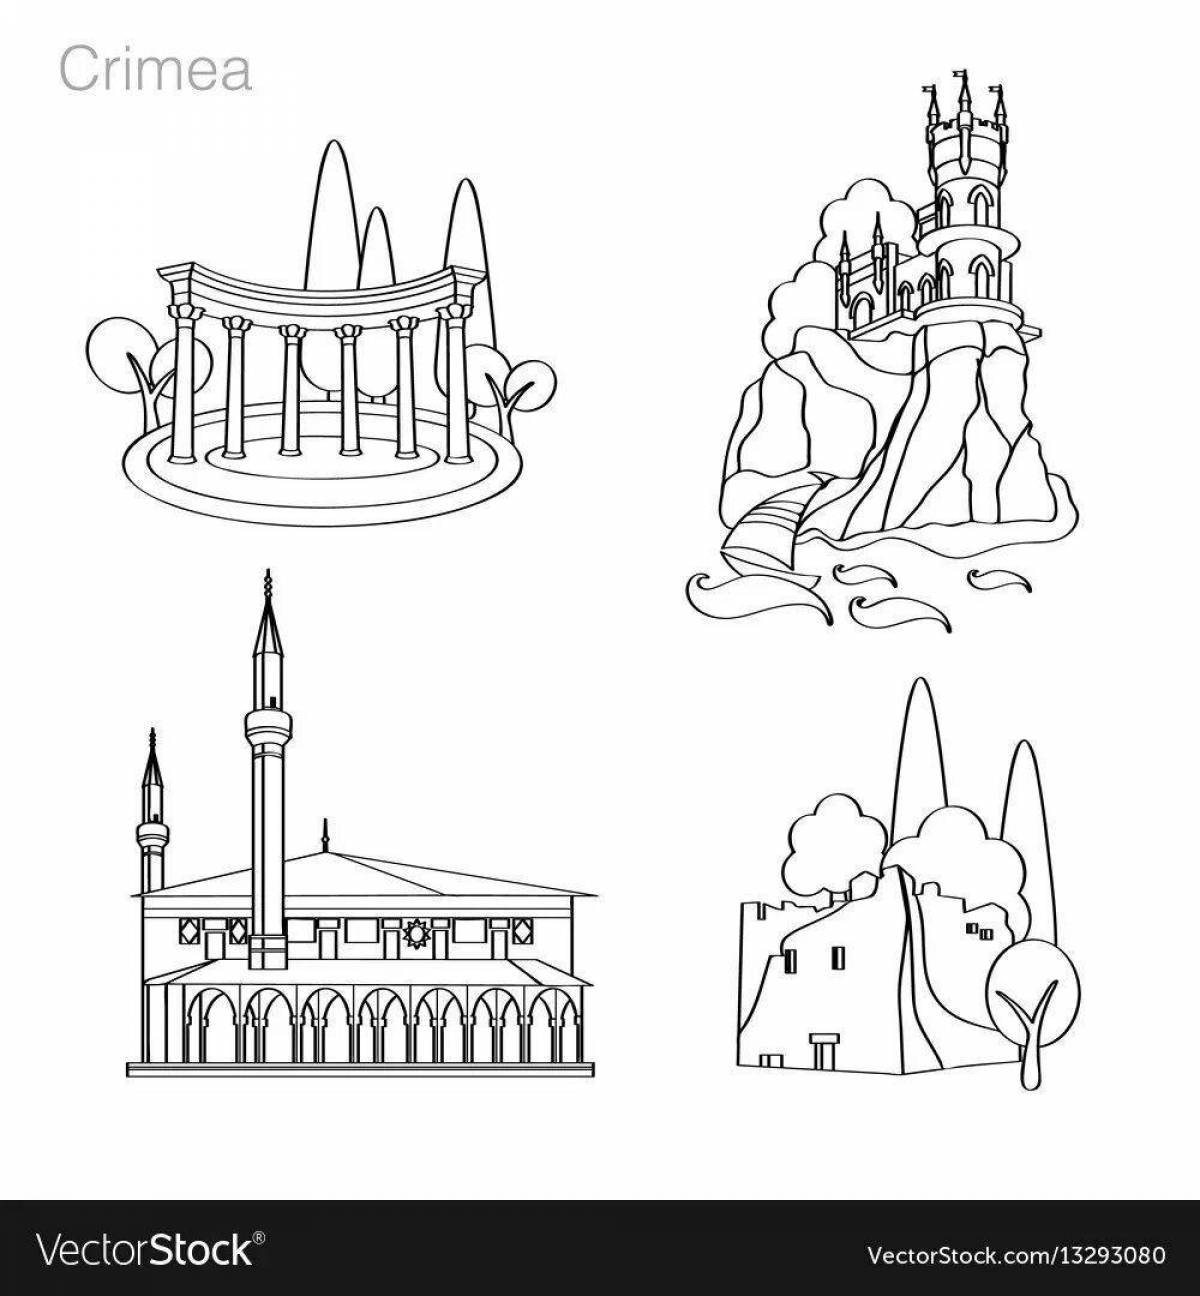 Fun coloring Crimea for elementary school children